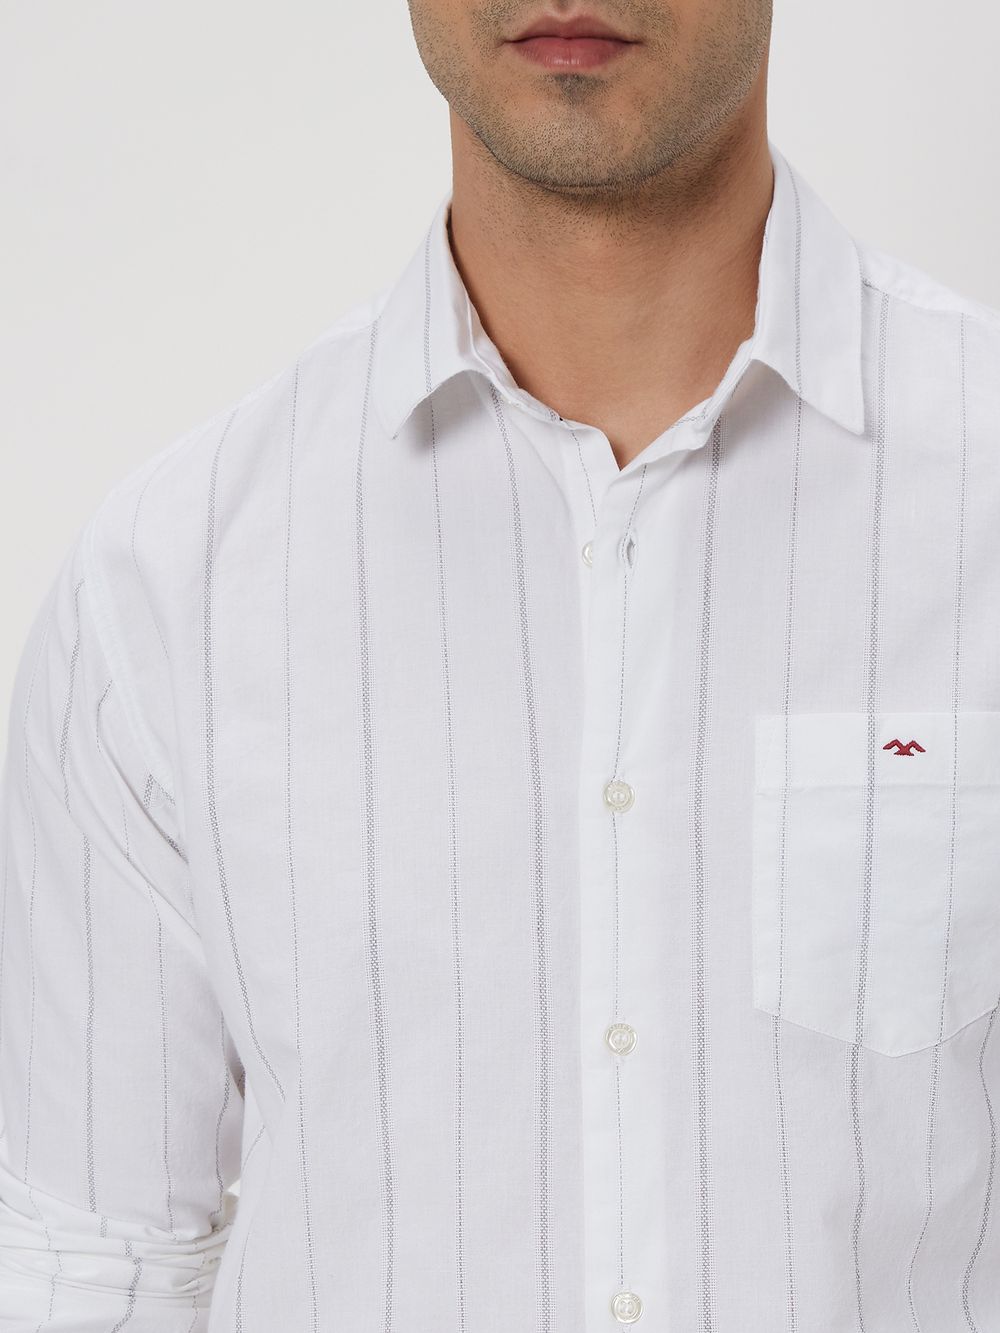 White & Black Pin Stripe Shirt